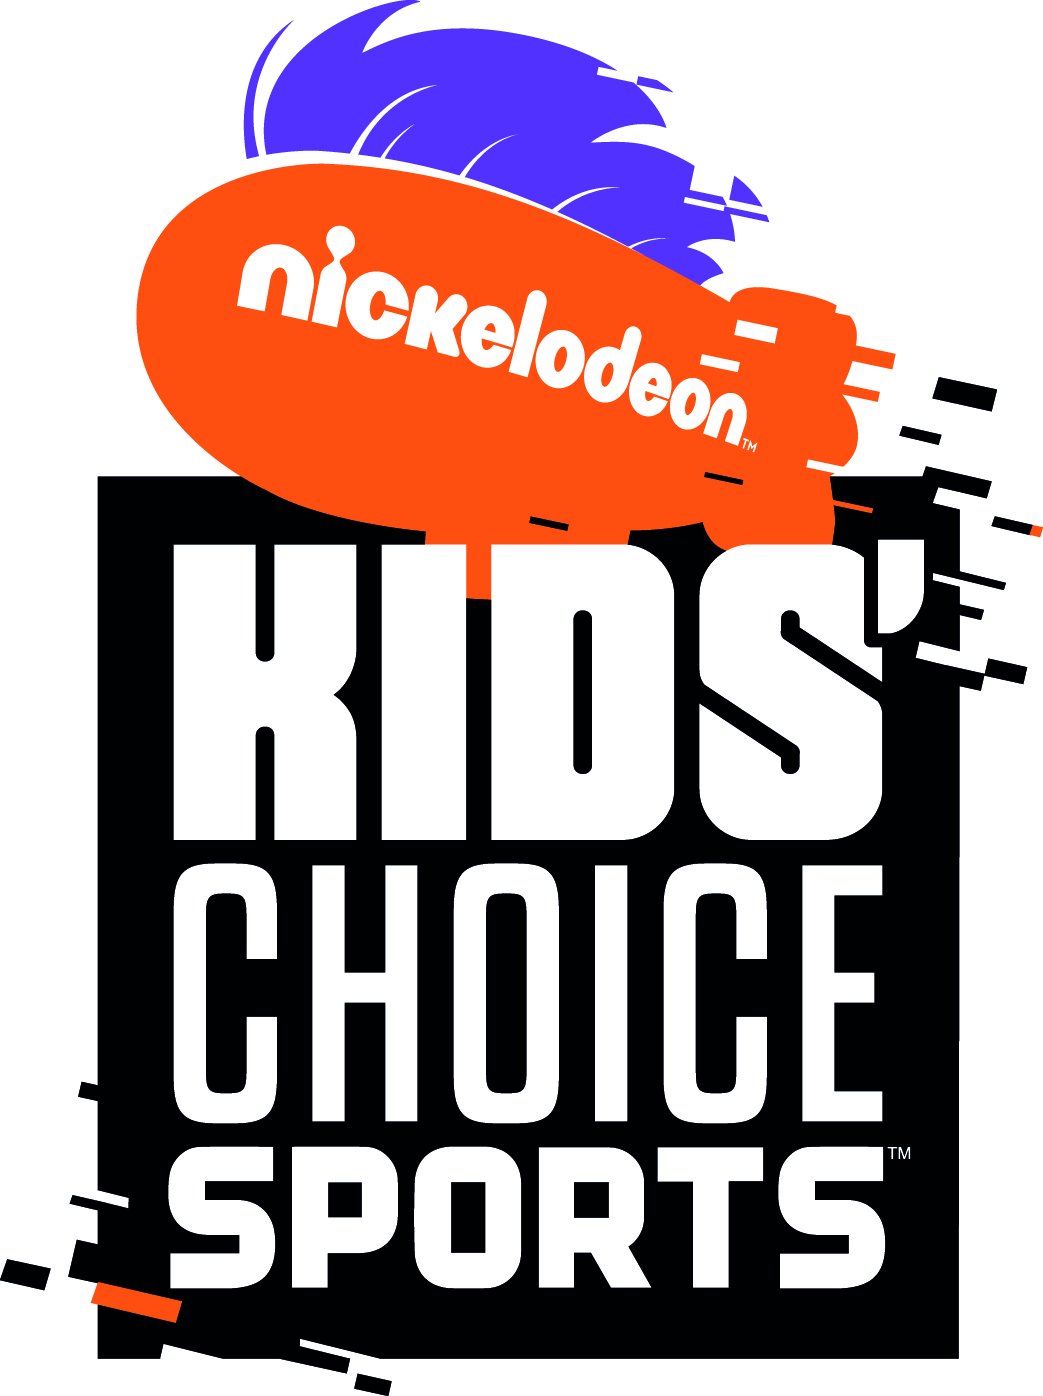 Nickelodeon Australia (@nickelodeon_au) • Instagram photos and videos